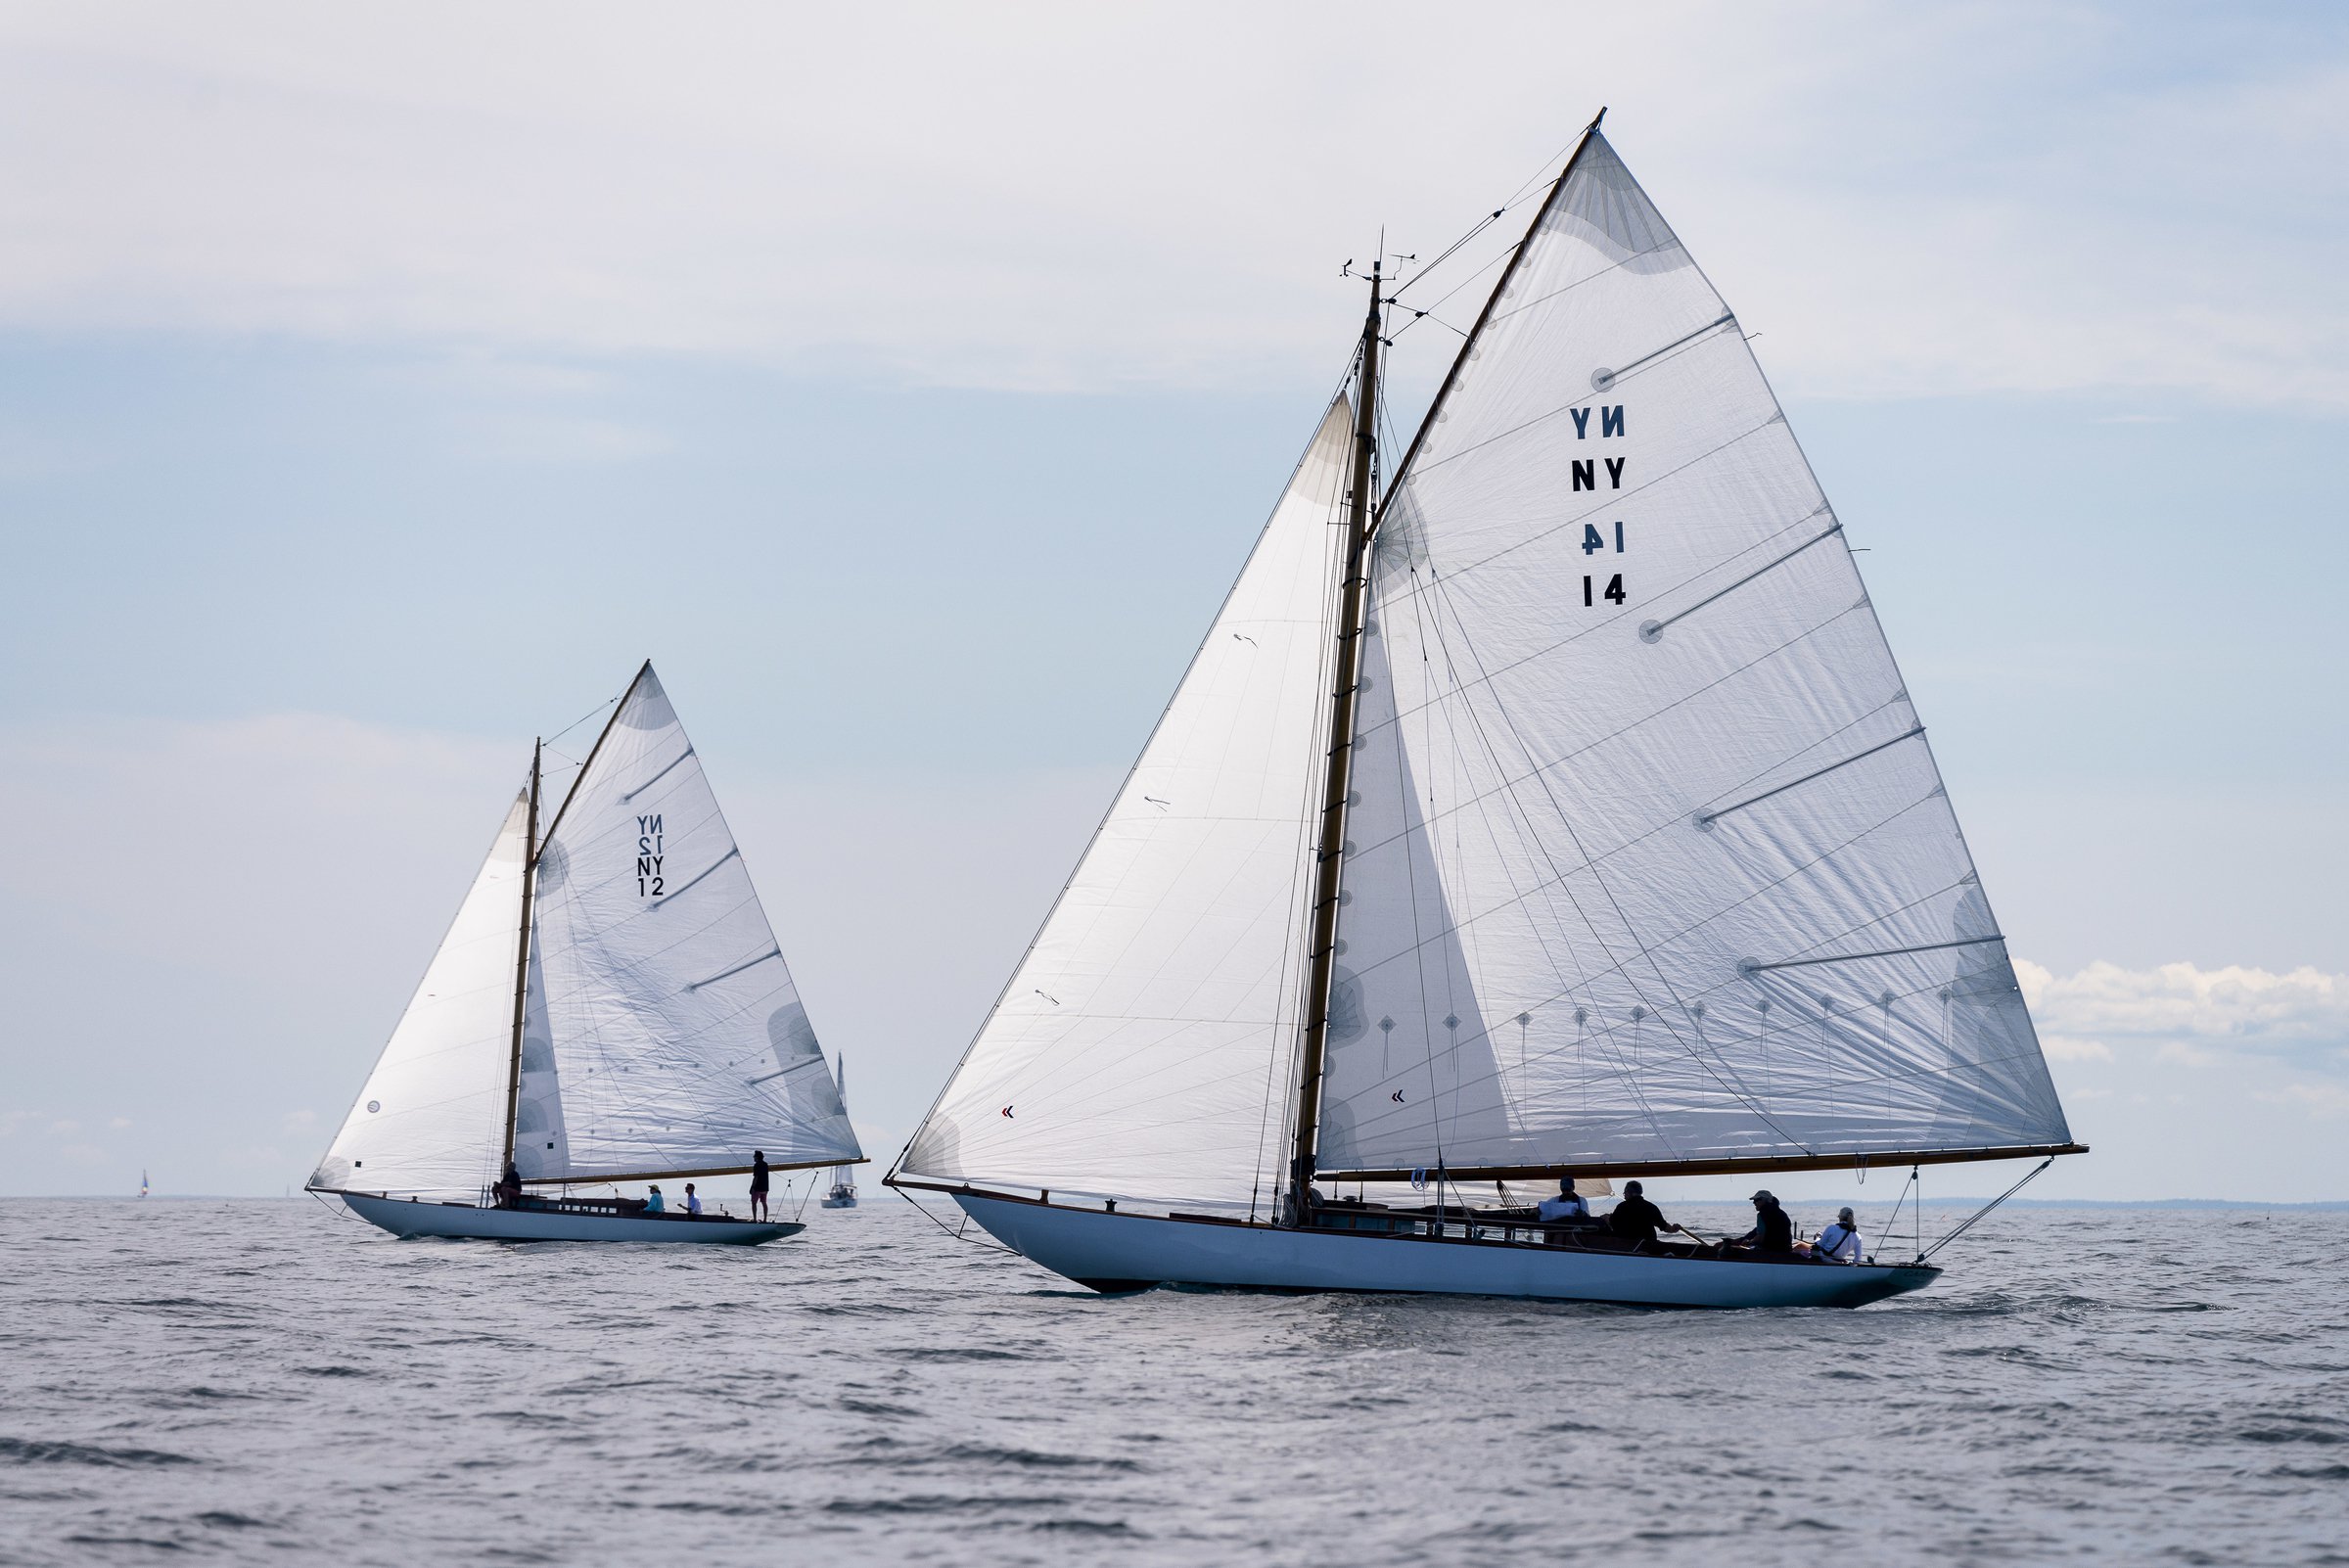 Rowdy and Cara Mia, New York 30 Class, sailing in the Marblehead Corinthian Classic Yacht Regatta, race one.